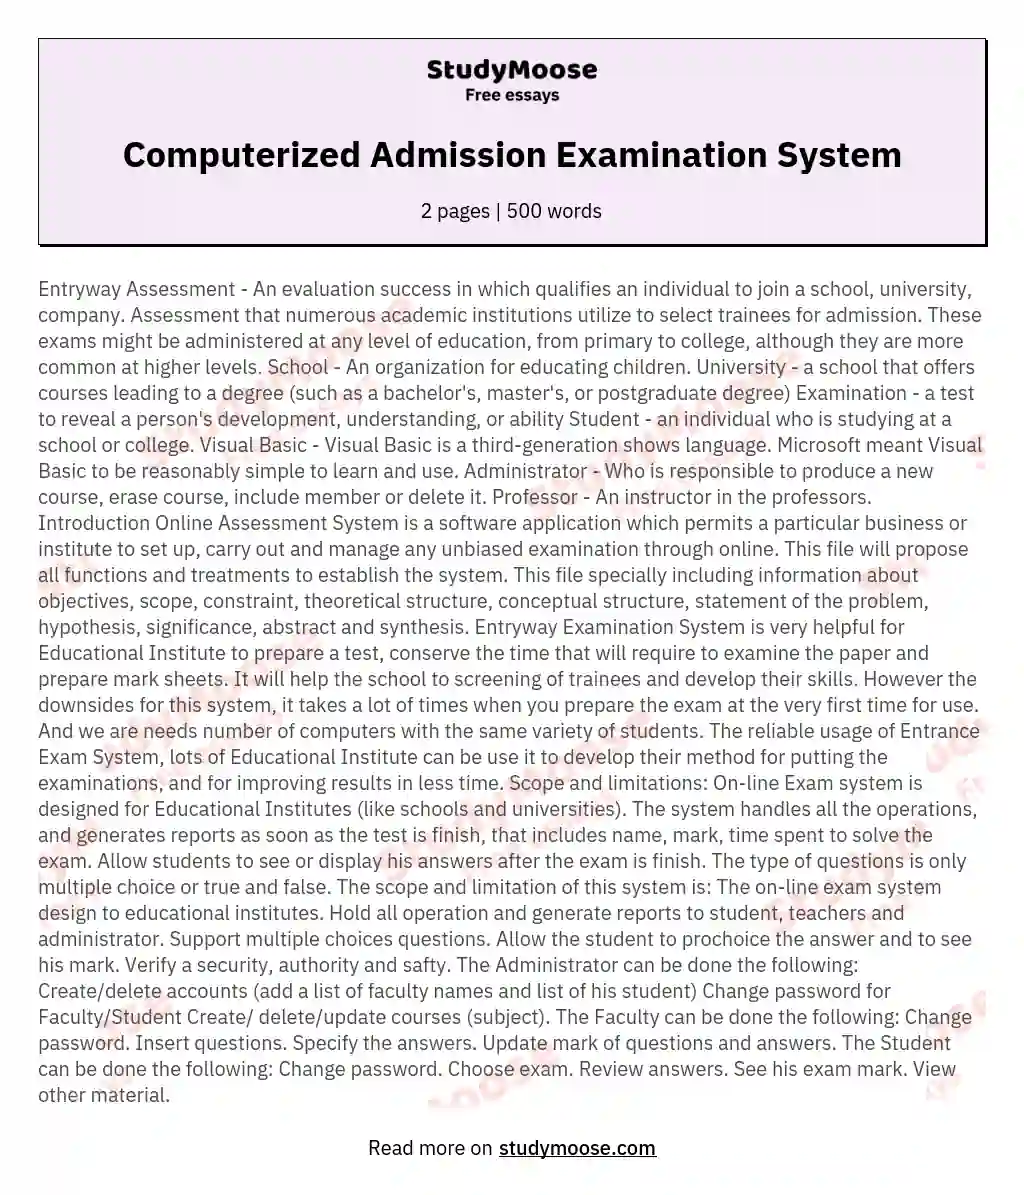 Computerized Admission Examination System essay